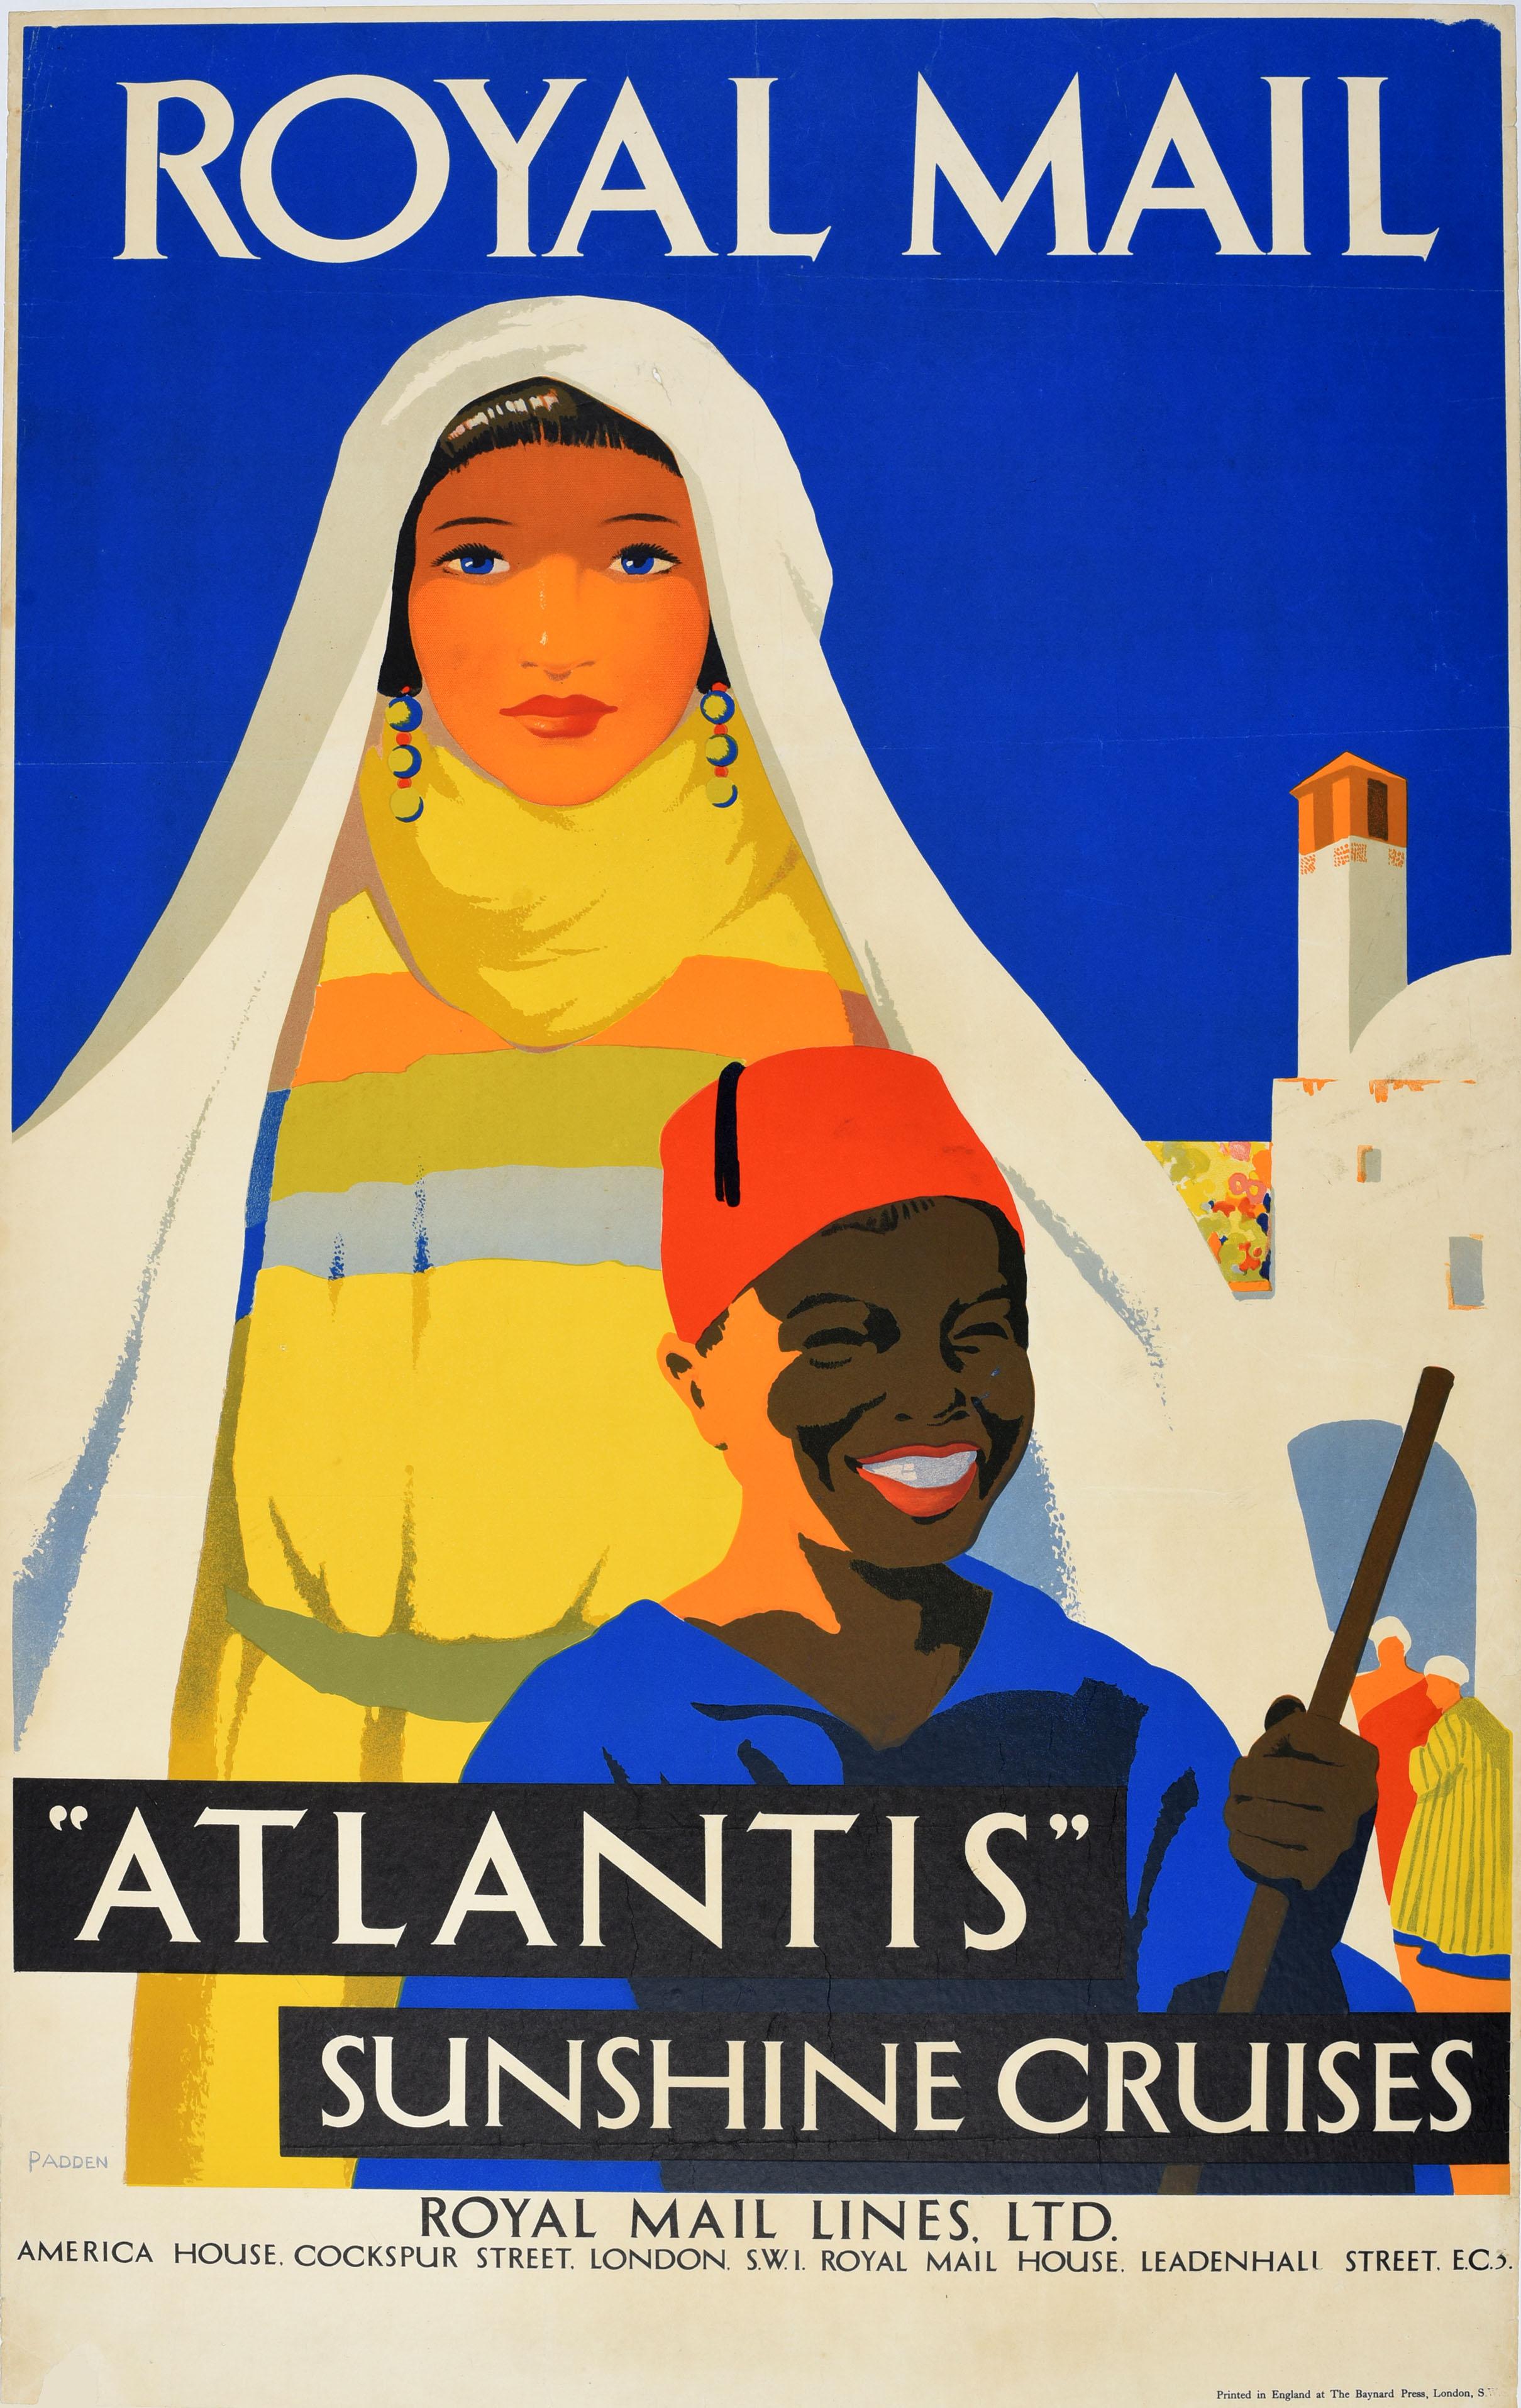 Percy Padden Print - Original Vintage Travel Poster Sunshine Cruises Atlantis Royal Mail Steam Ship